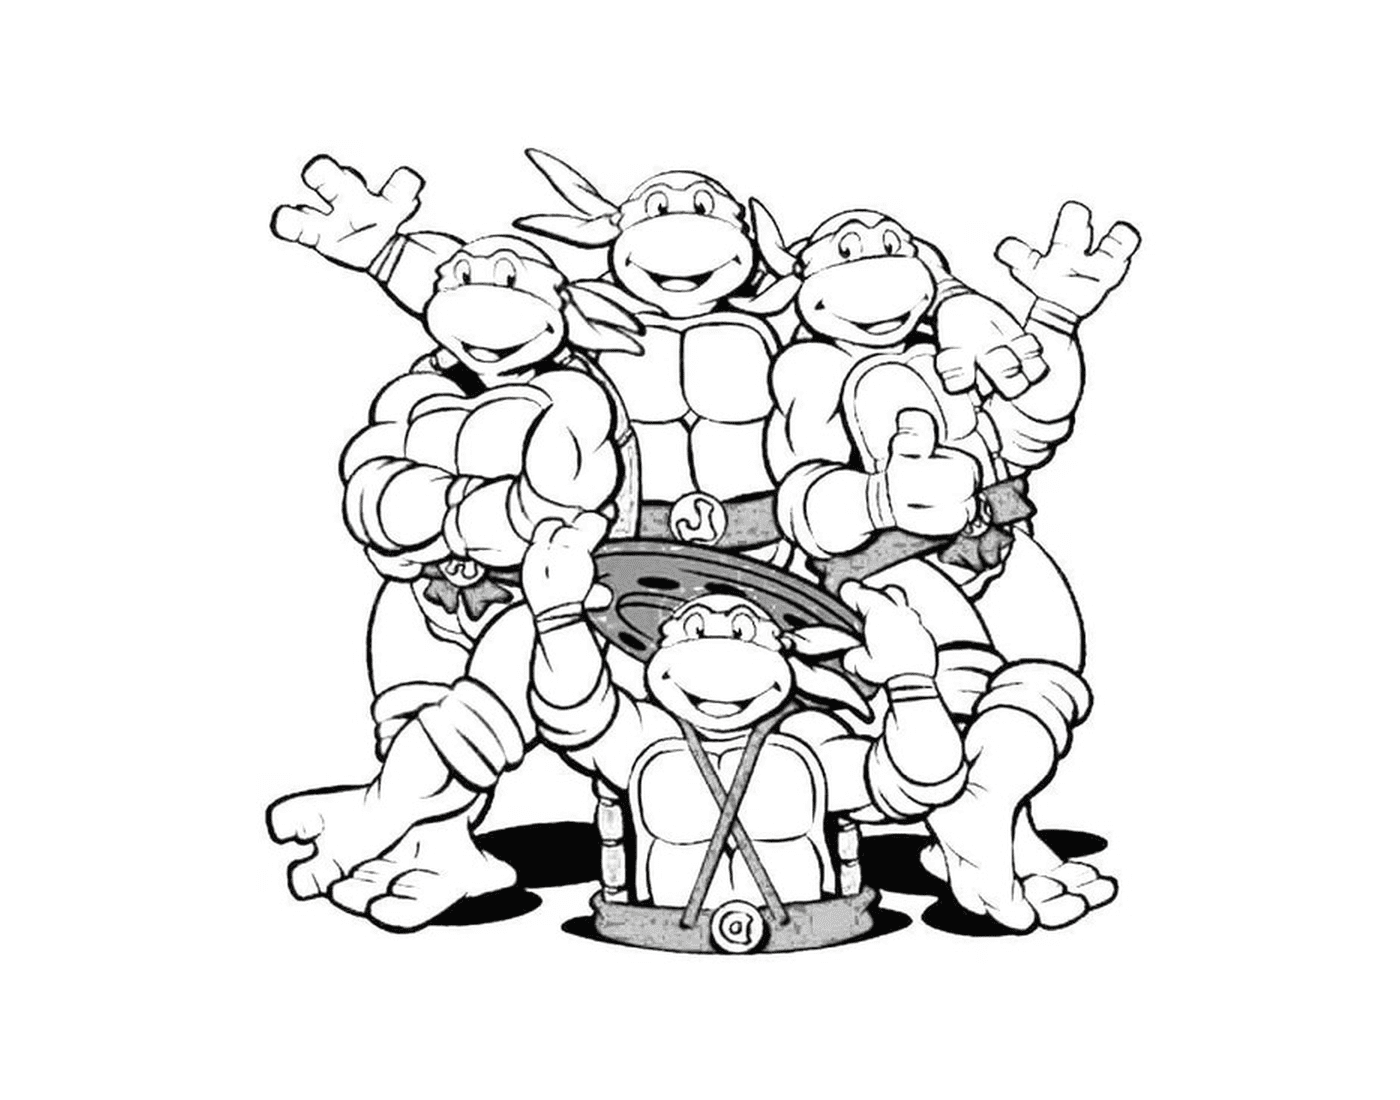  Fantastico team di tartarughe ninja 